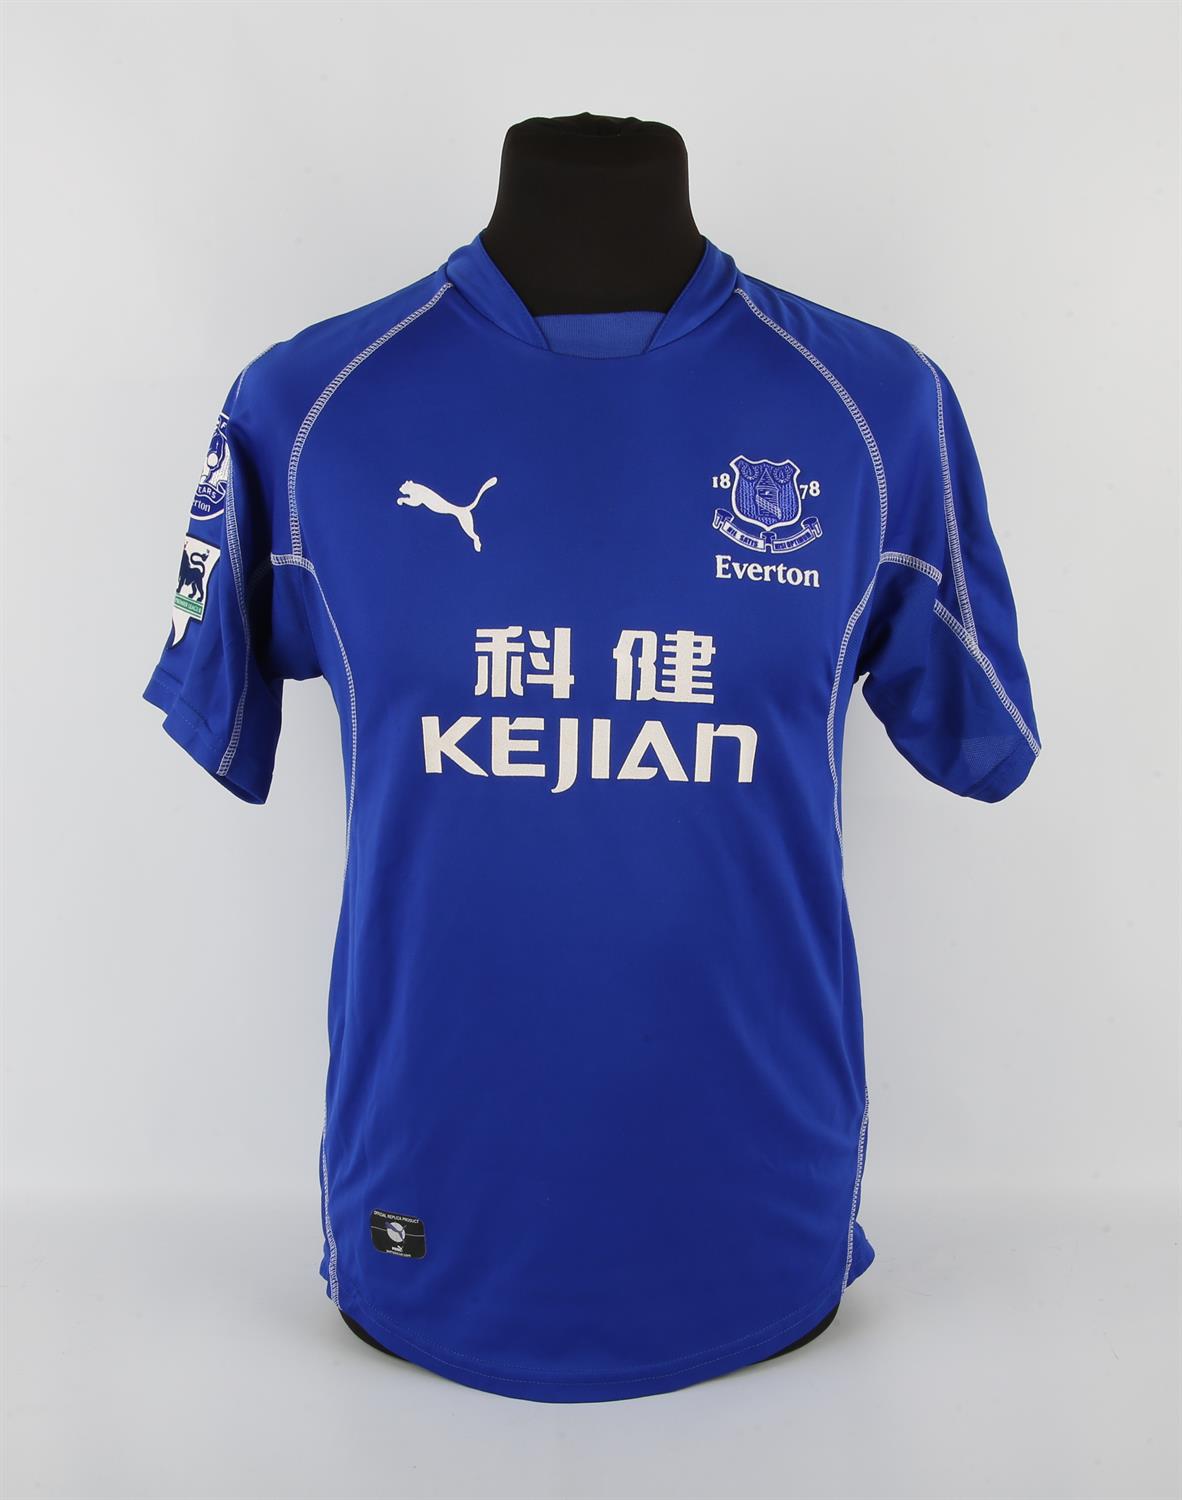 Everton Football Club Carsley (No.26) 2002 - 2003 shirt. Match worn. Provenance kitman. - Image 2 of 2